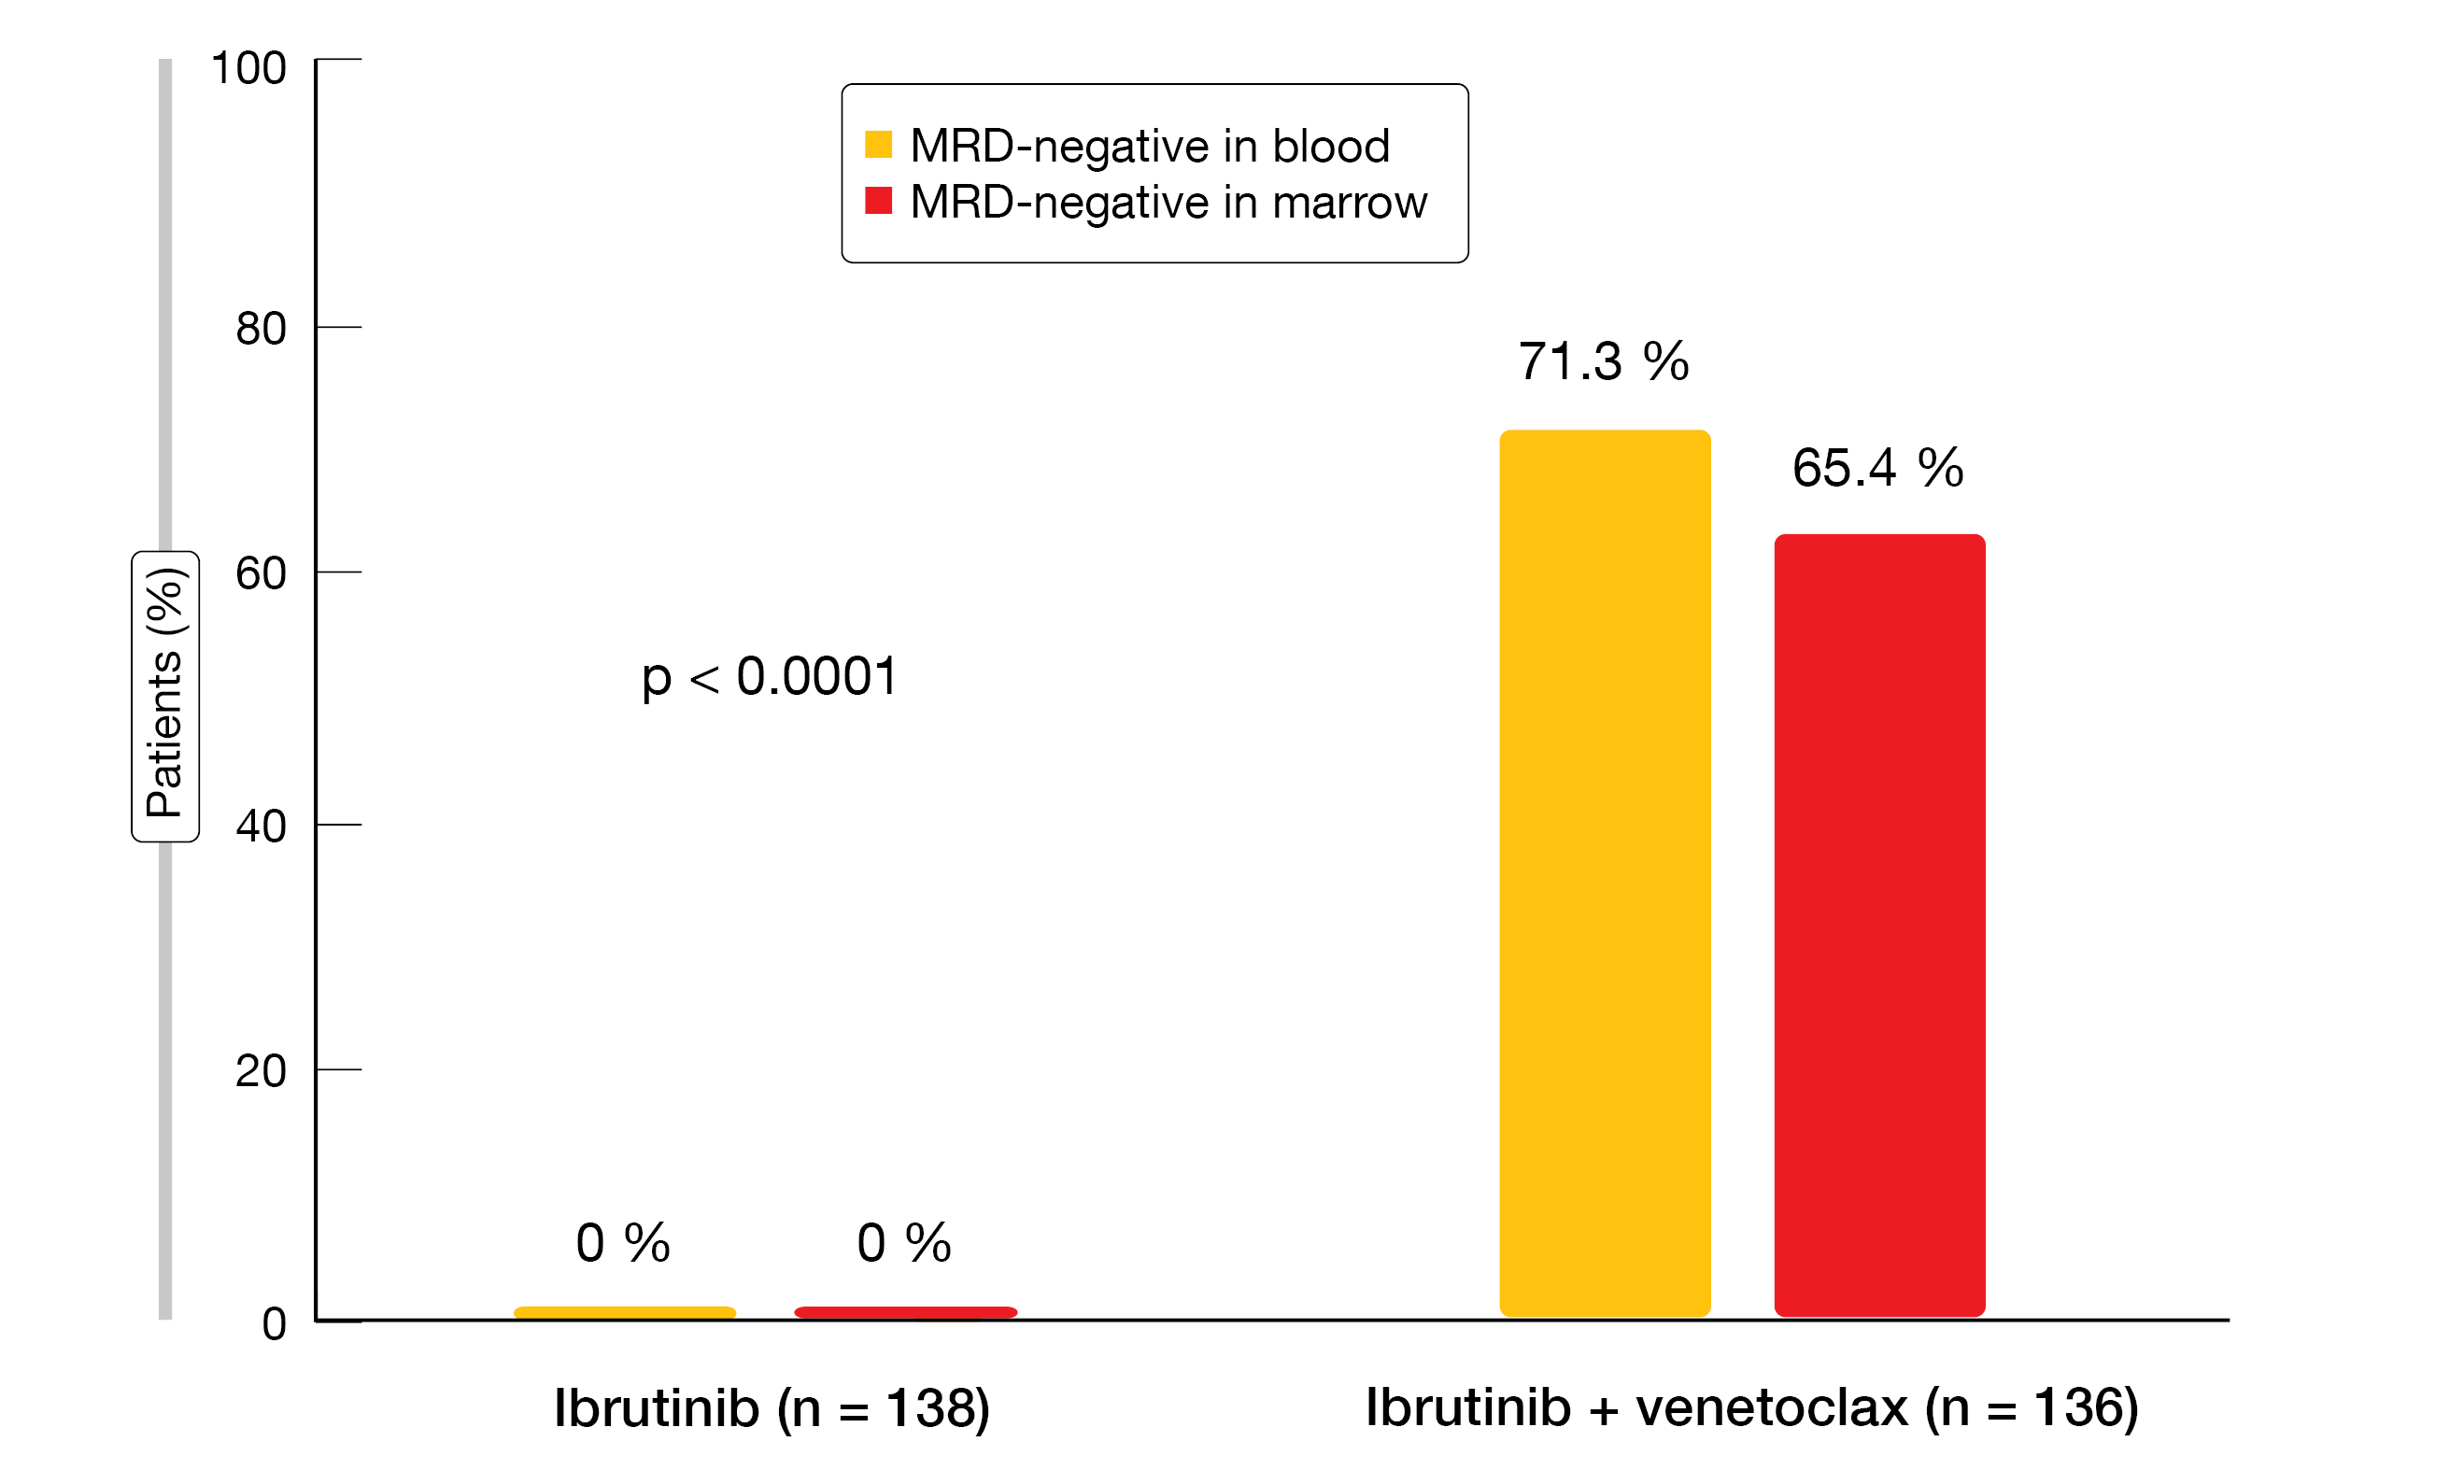 Figure 2: MRD negativity with ibrutinib/venetoclax vs. ibrutinib at 2 years in the NCRI FLAIR trial